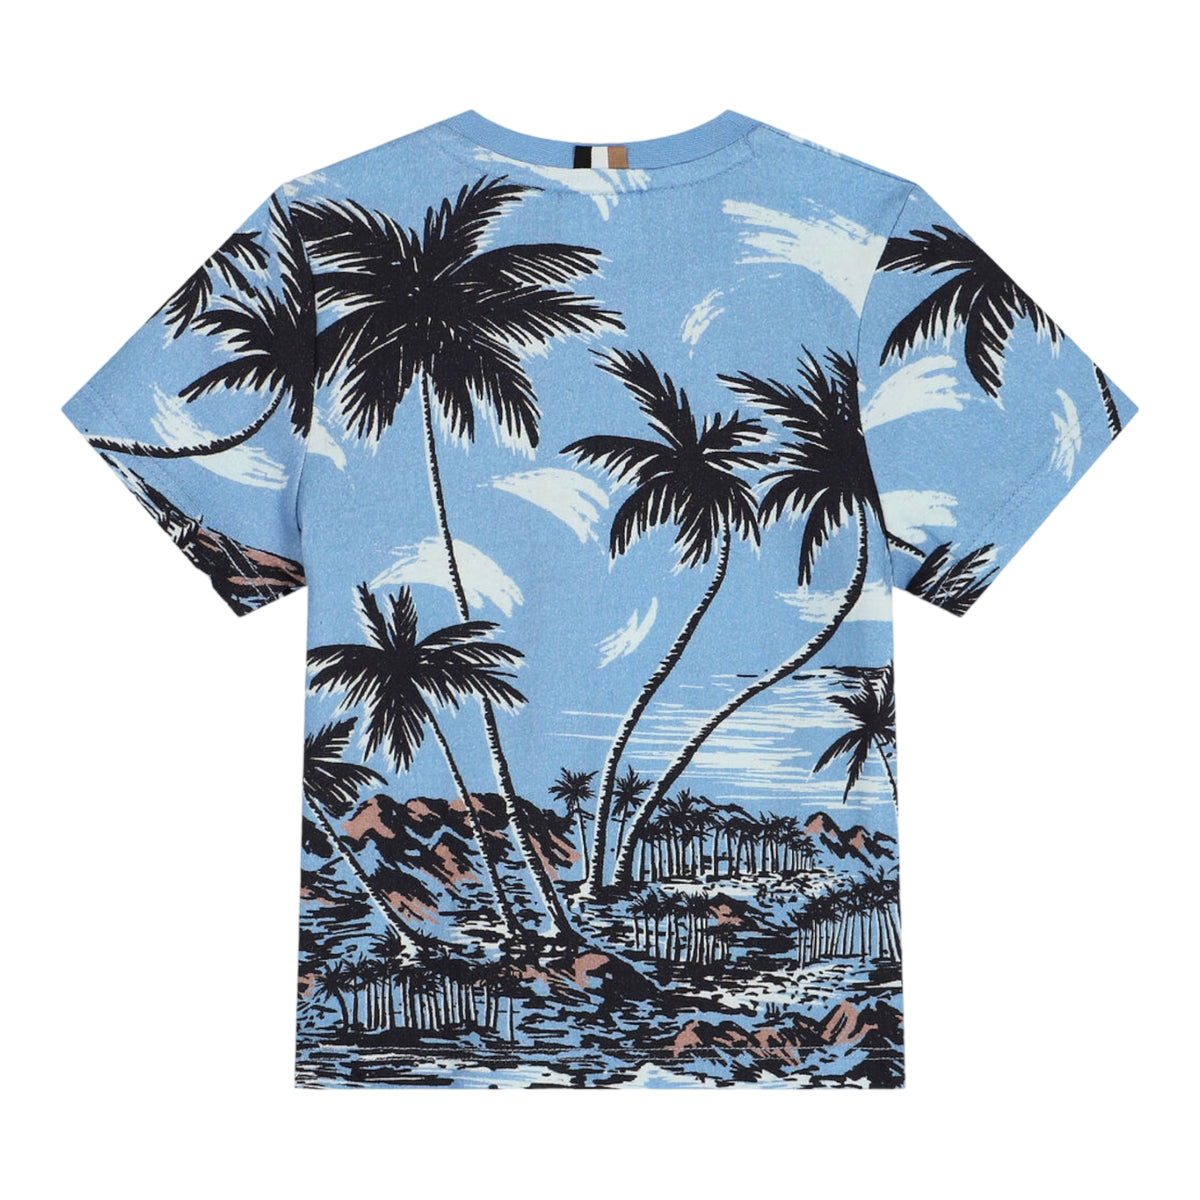 Hugo Boss Kids Toddler's Hawaiian Print T-Shirt